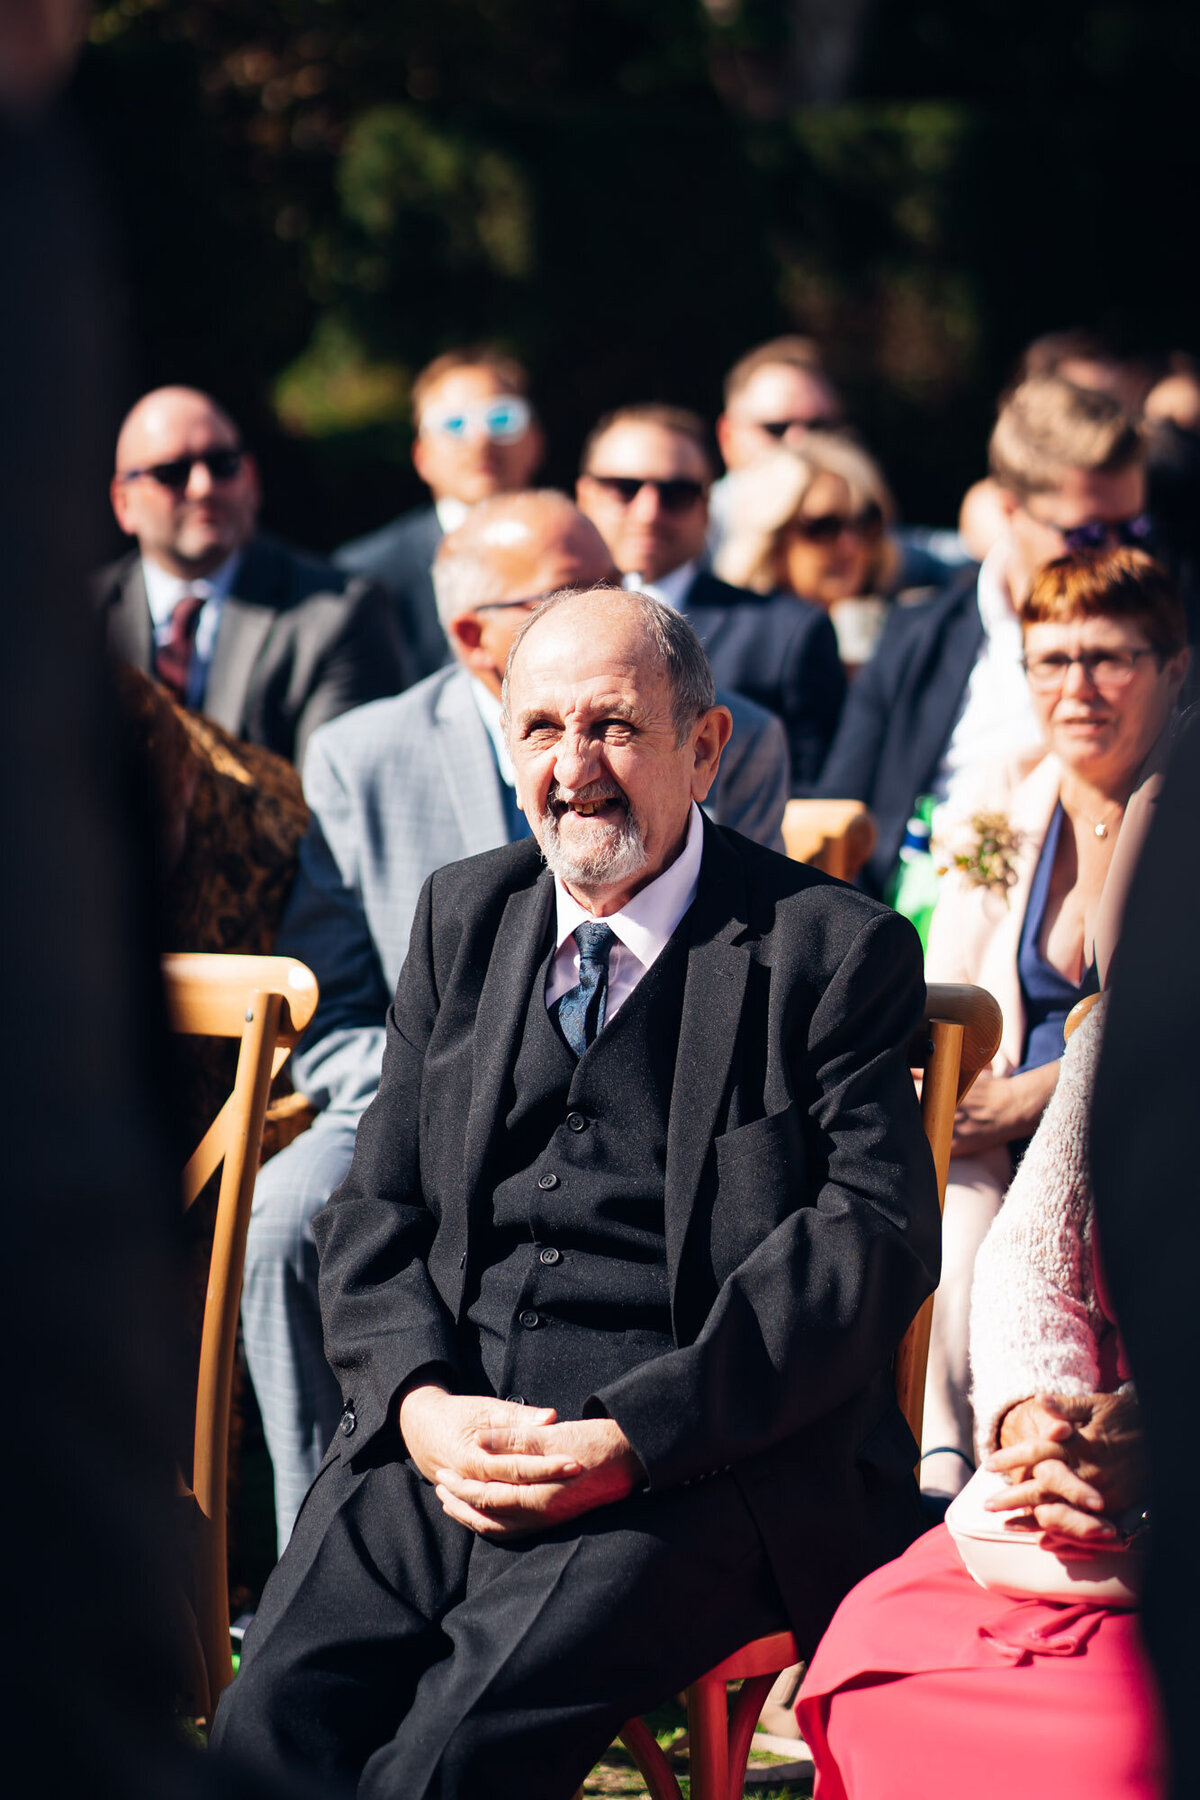 Pauntley-court-wedding-photographer-guests-during-outdoor-ceremony